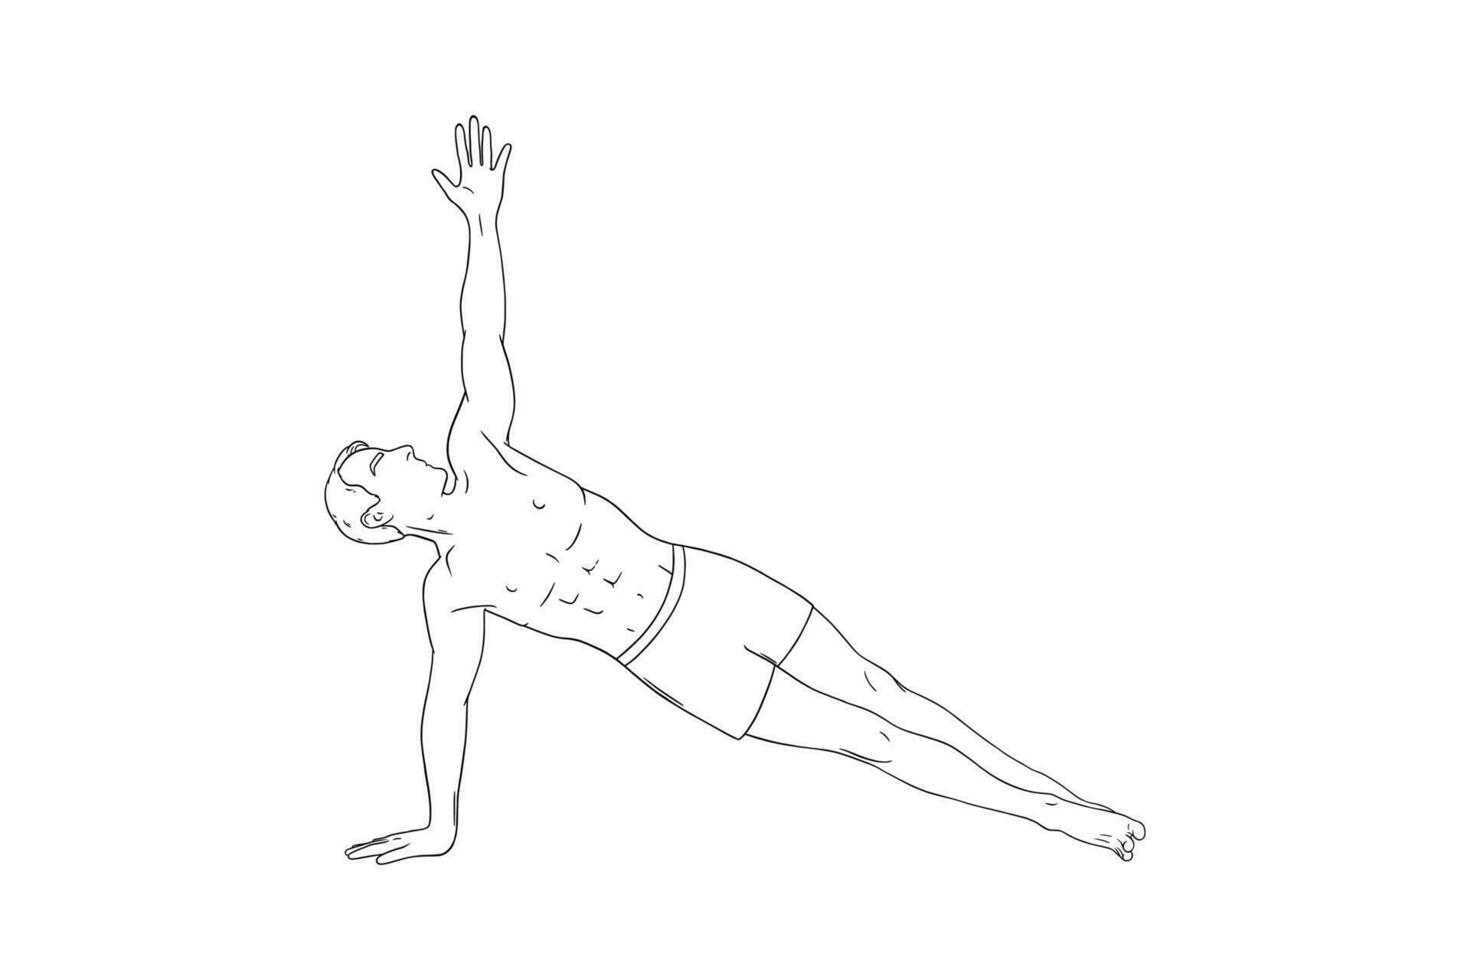 Man in side plank pose. Yogi man in vasisthasana isolated in white background. Sketch vector illustration